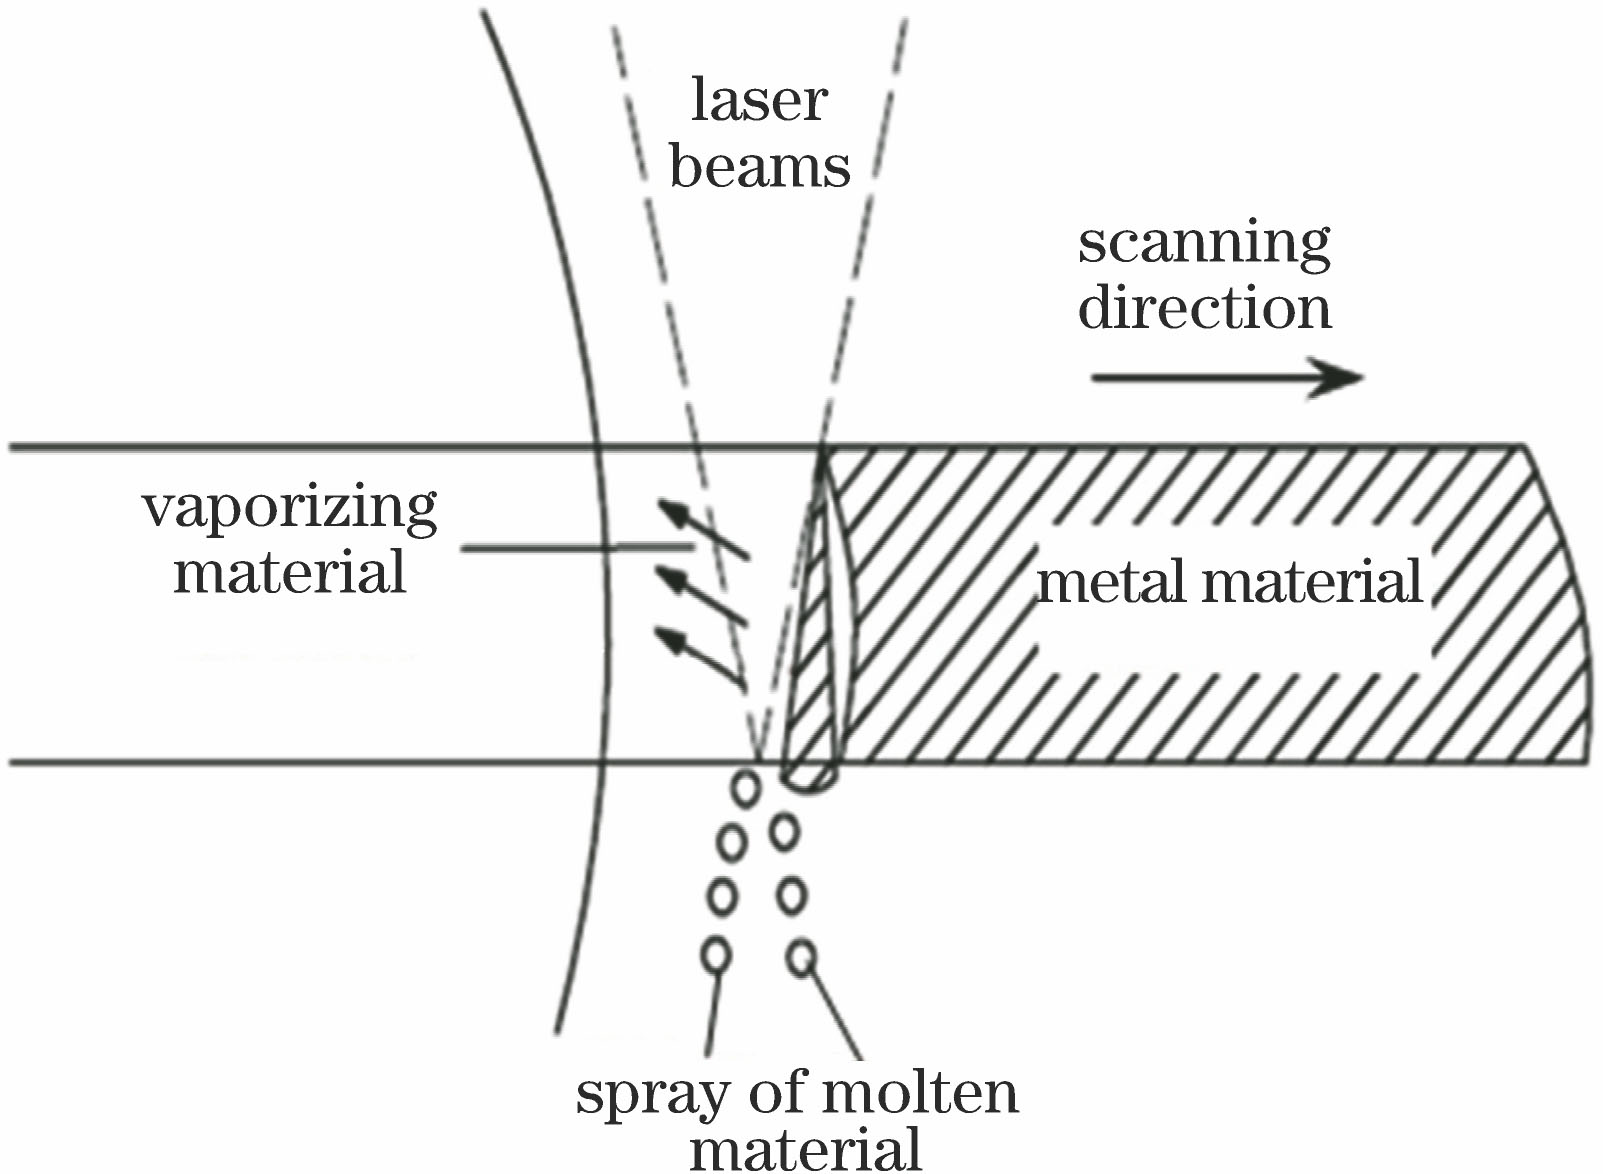 Model of laser peeling of metallic materials